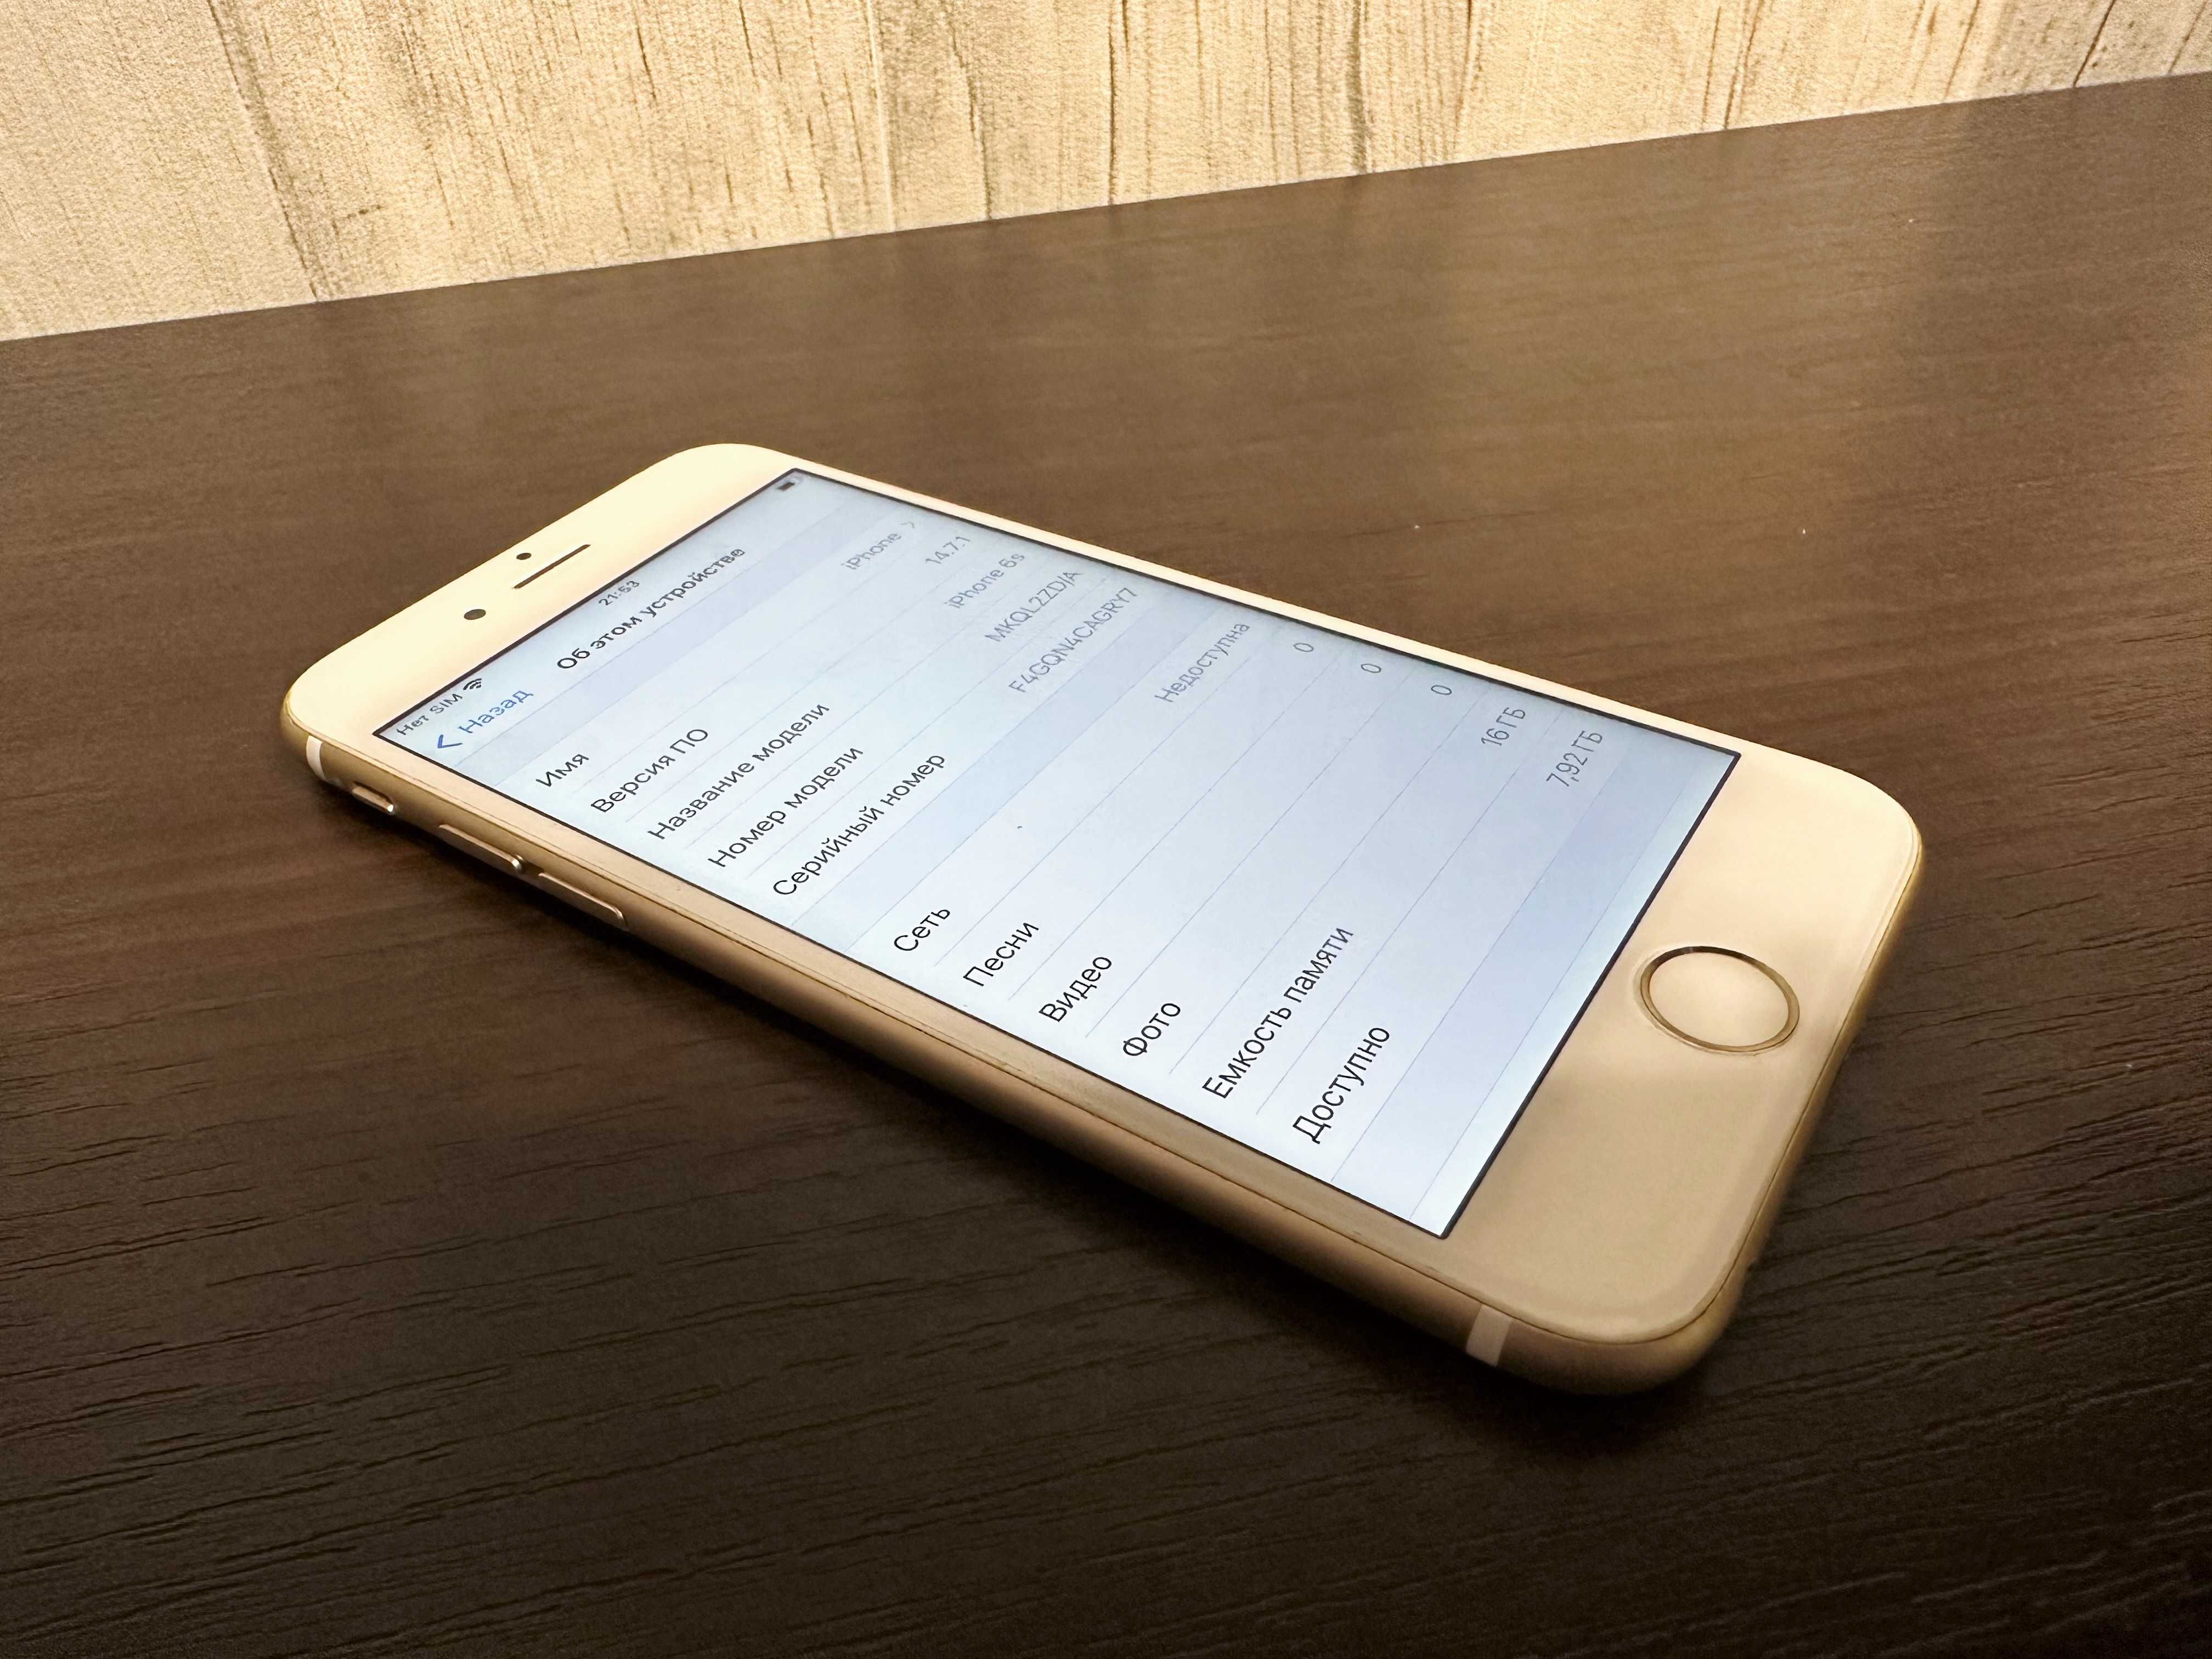 Apple iPhone 6 S 16Gb Gold